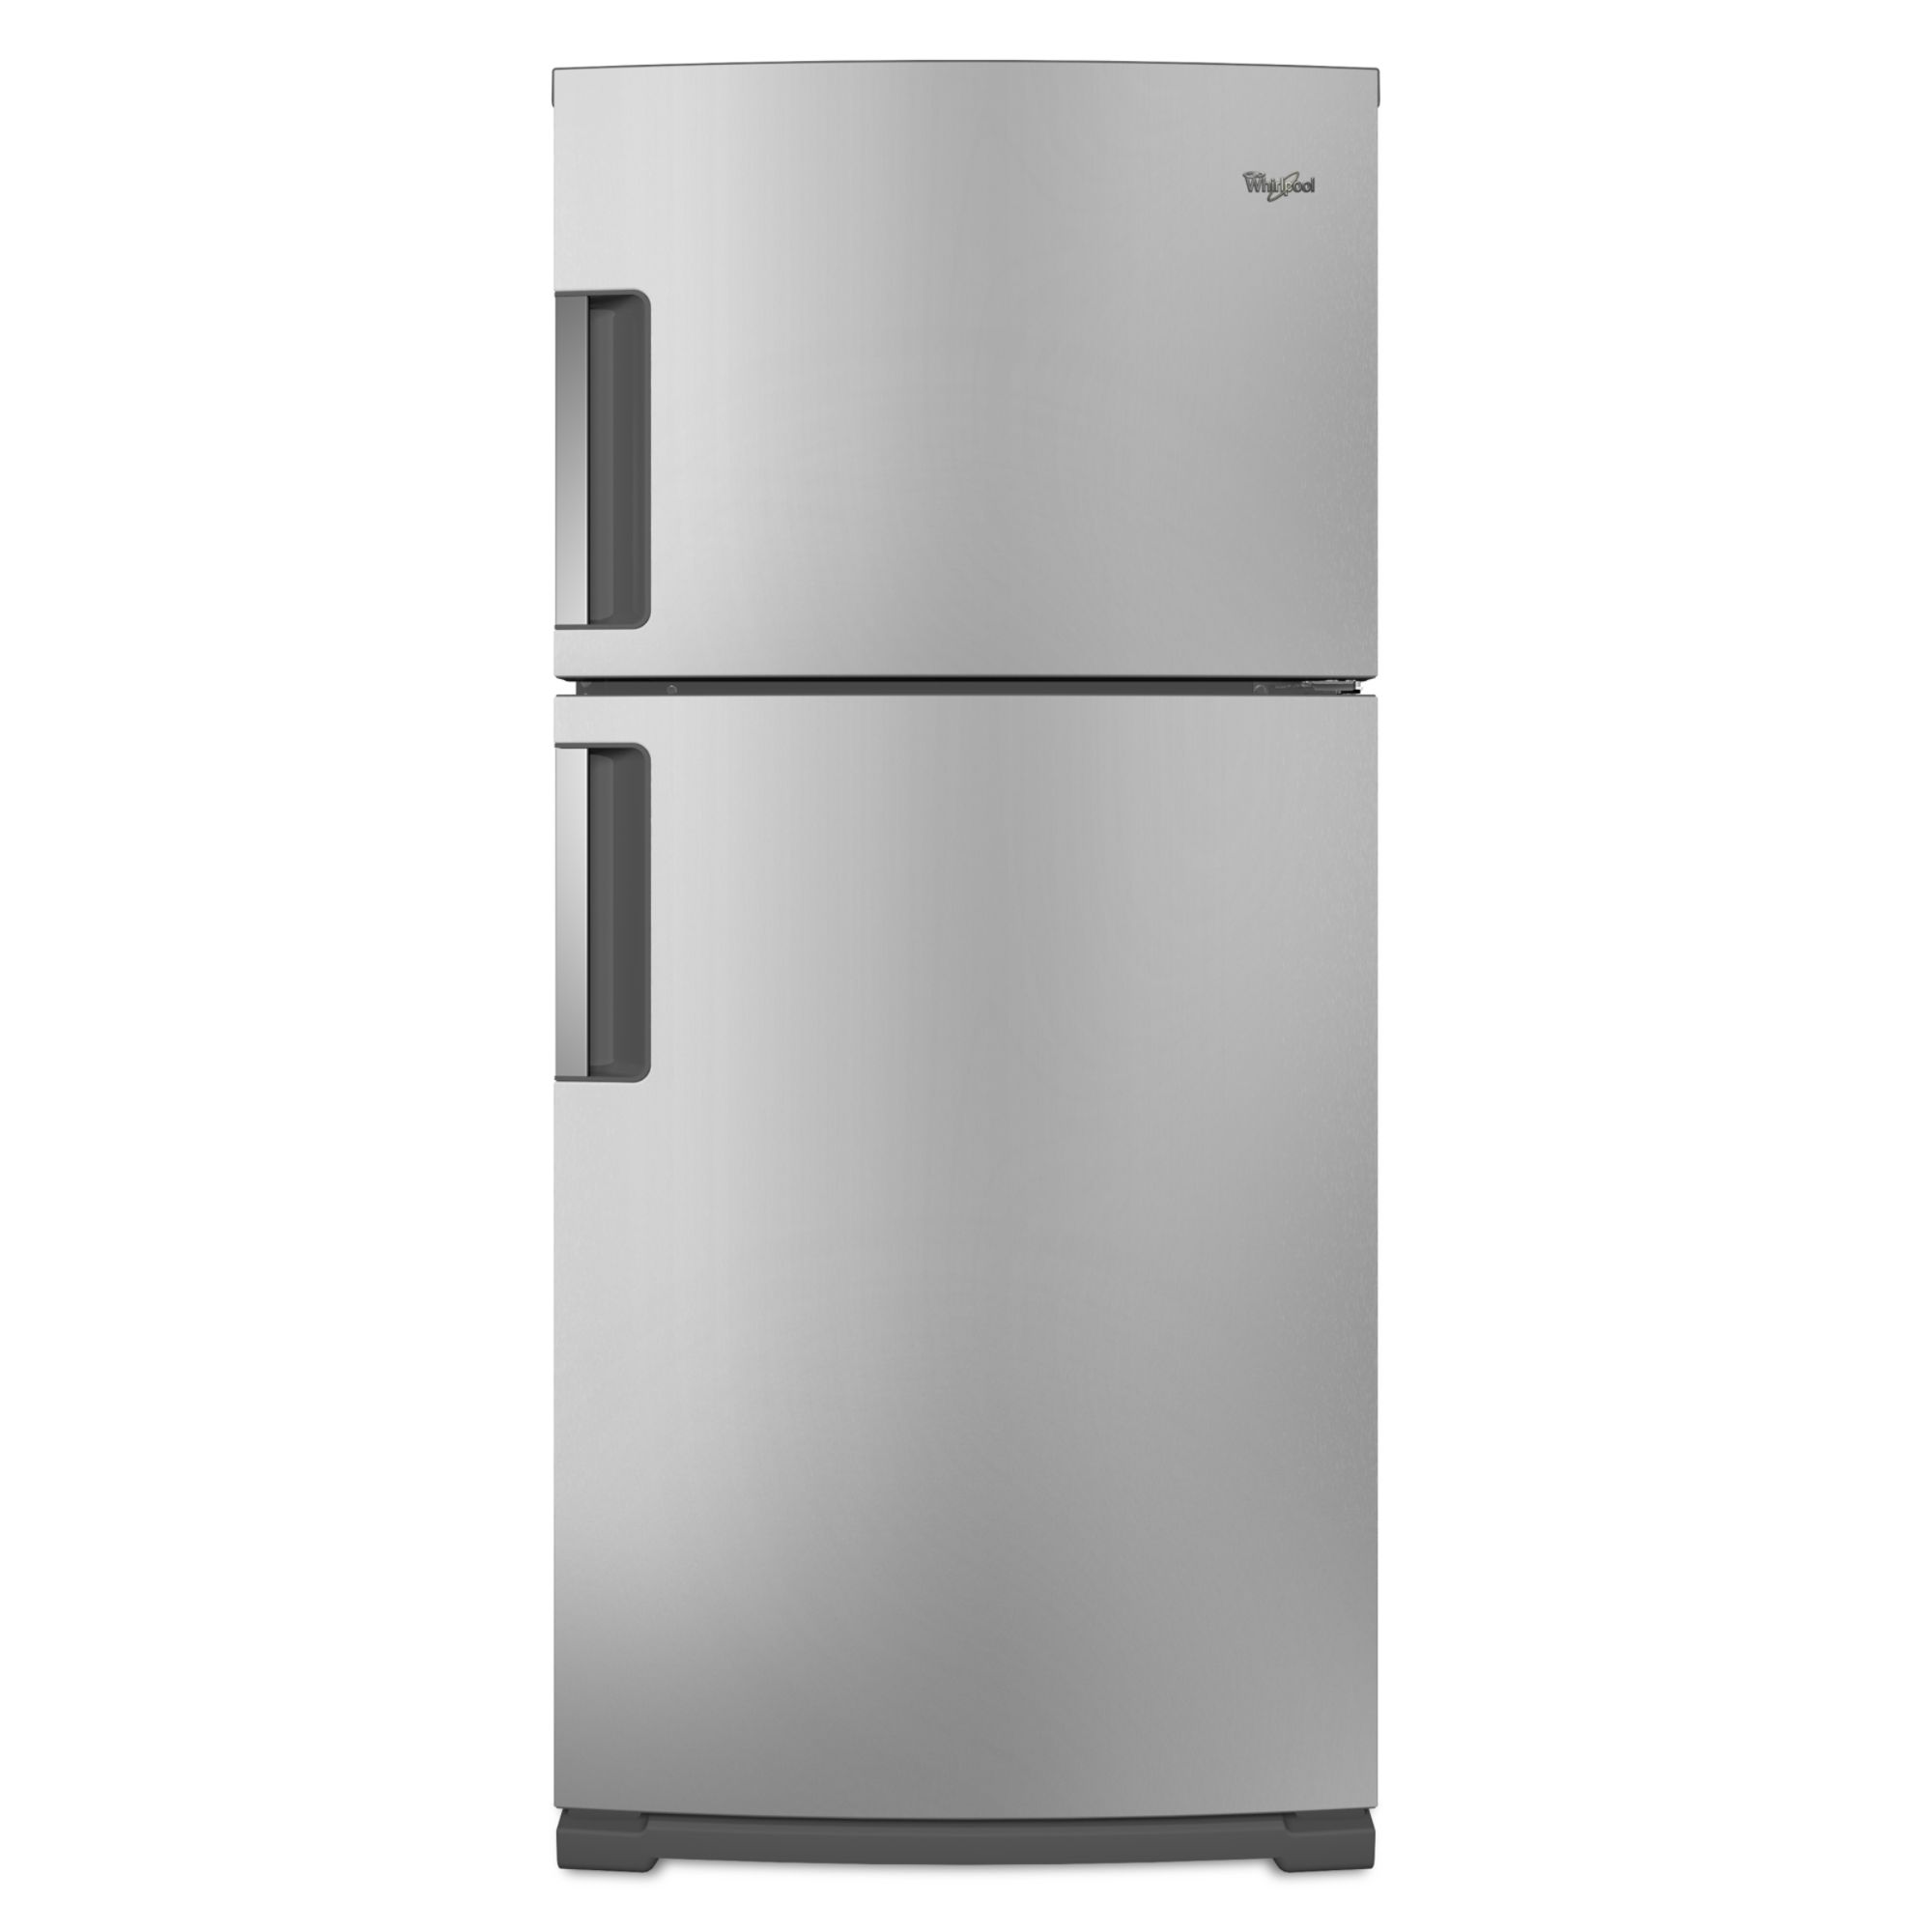 Whirlpool 19.0 cu. ft. Top-Freezer Refrigerator w/ Interior Water Dispenser - Stainless Steel